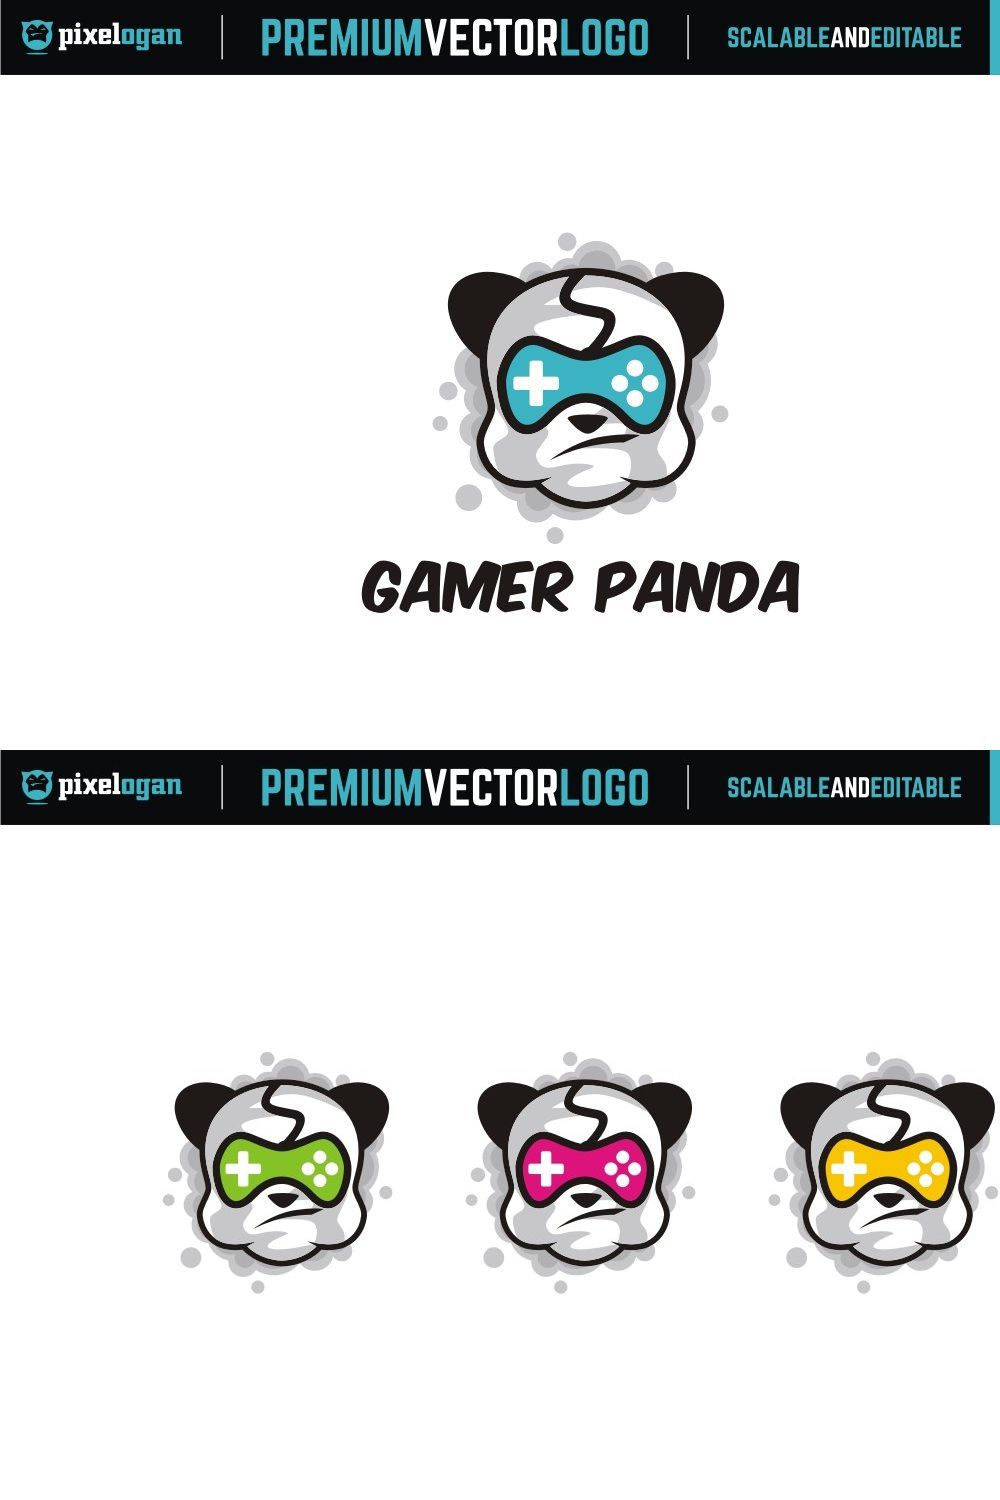 Gamer Panda pinterest preview image.